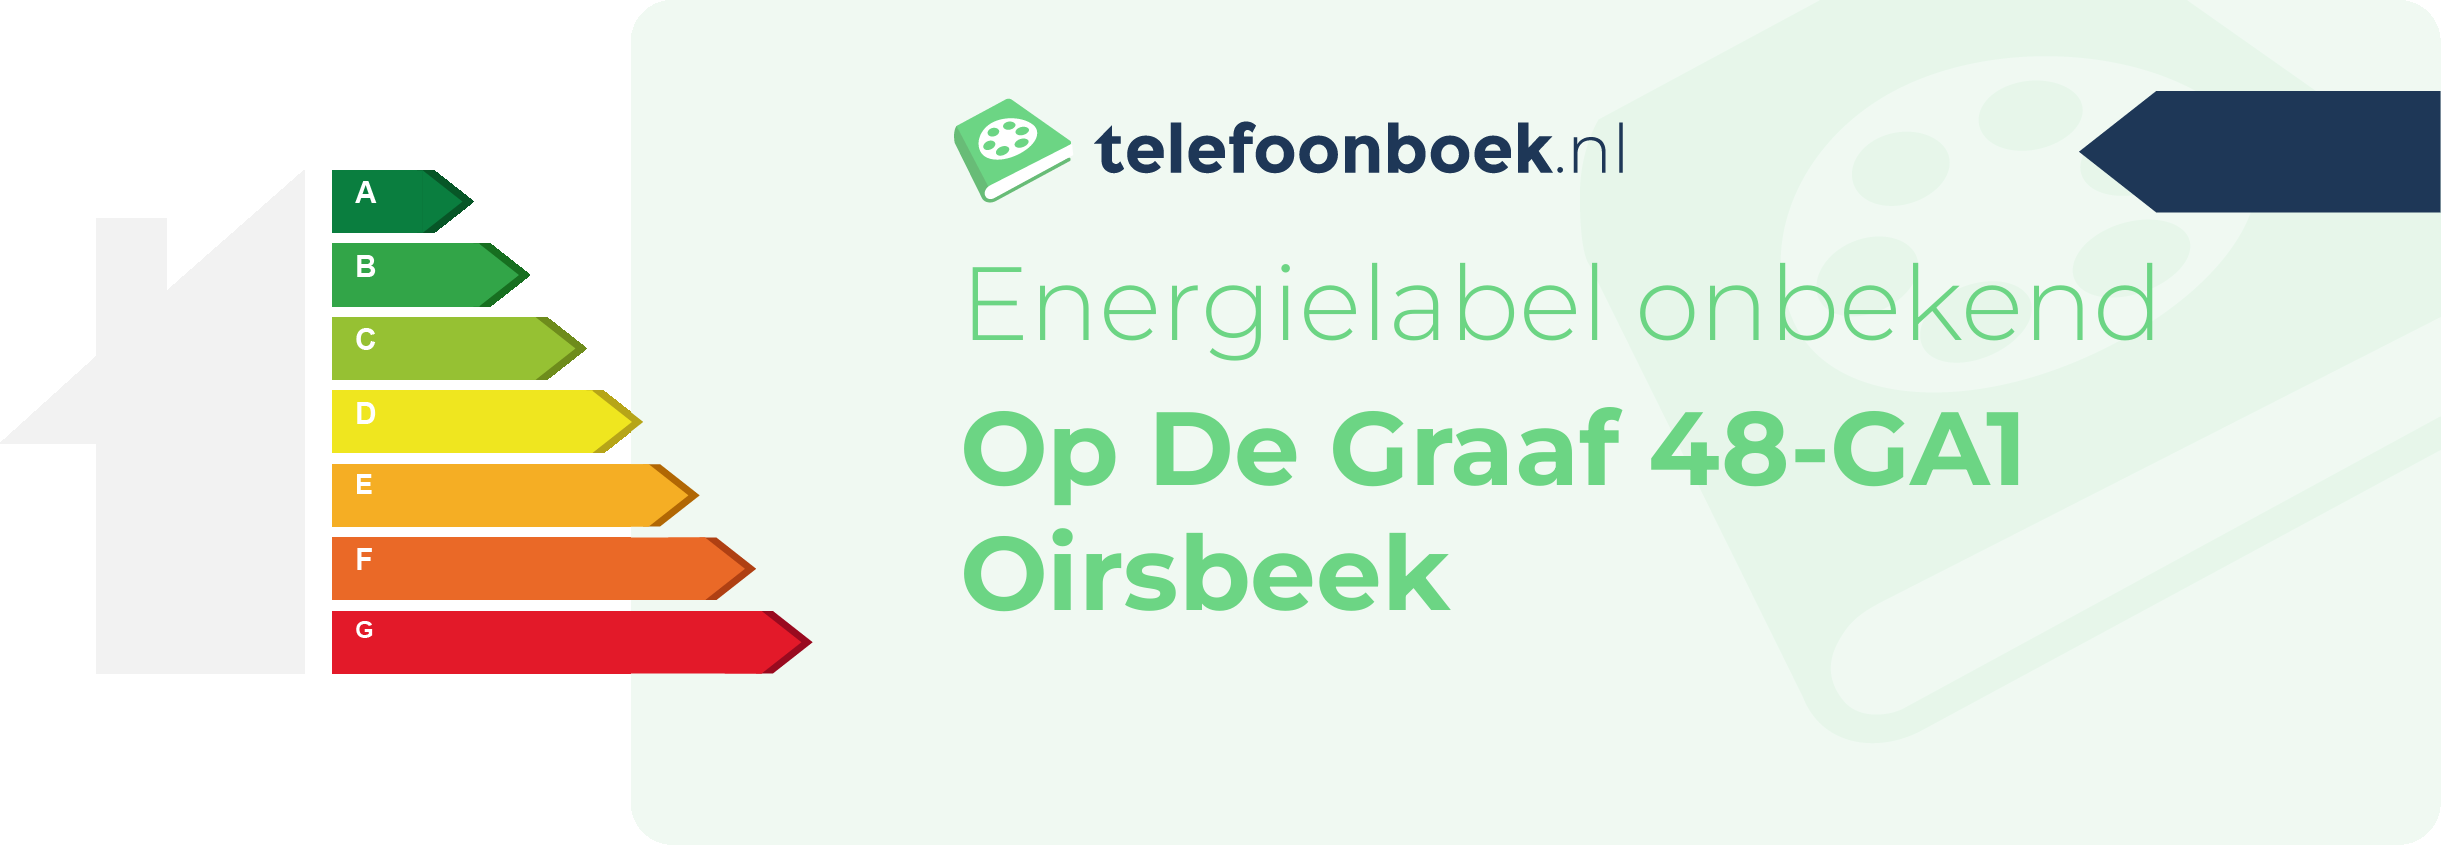 Energielabel Op De Graaf 48-GA1 Oirsbeek